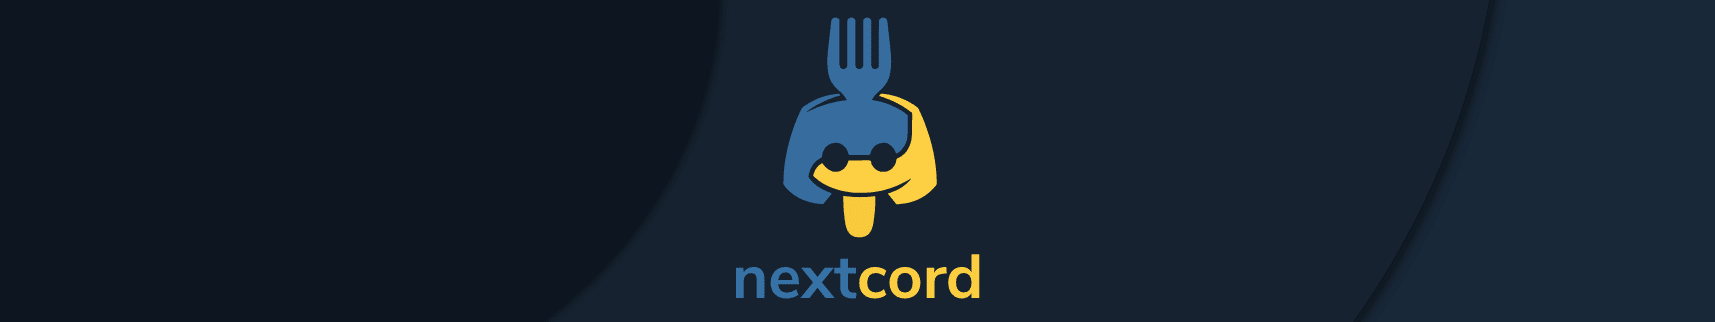 Nextcord